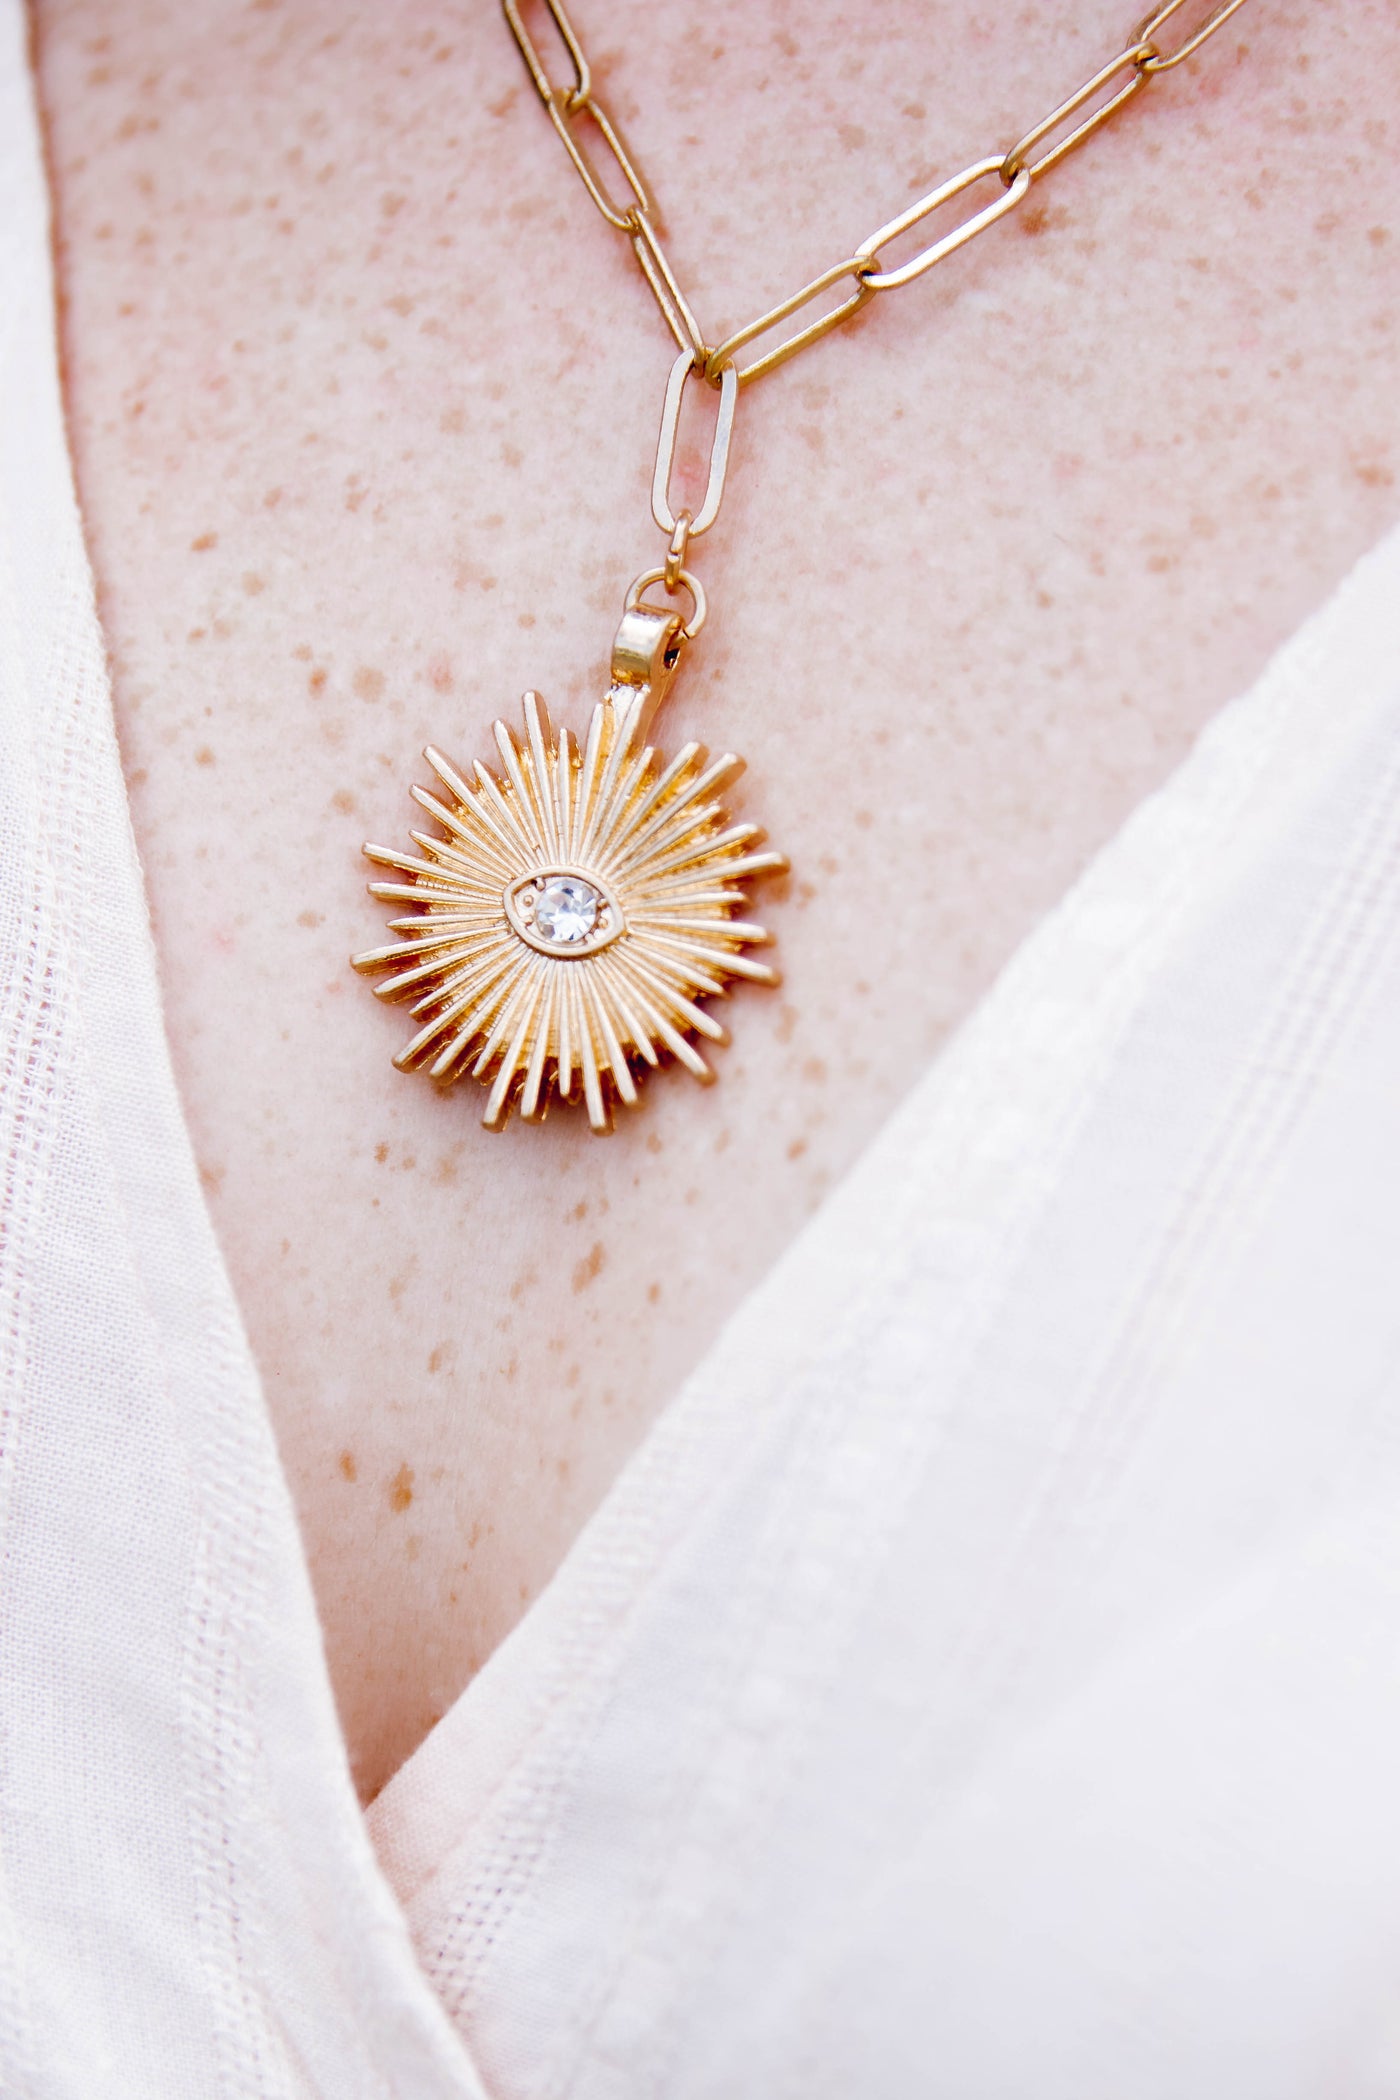 Canvas Chain Necklace- Sunburst Pendent Necklace- Evil Eye Gold Necklace